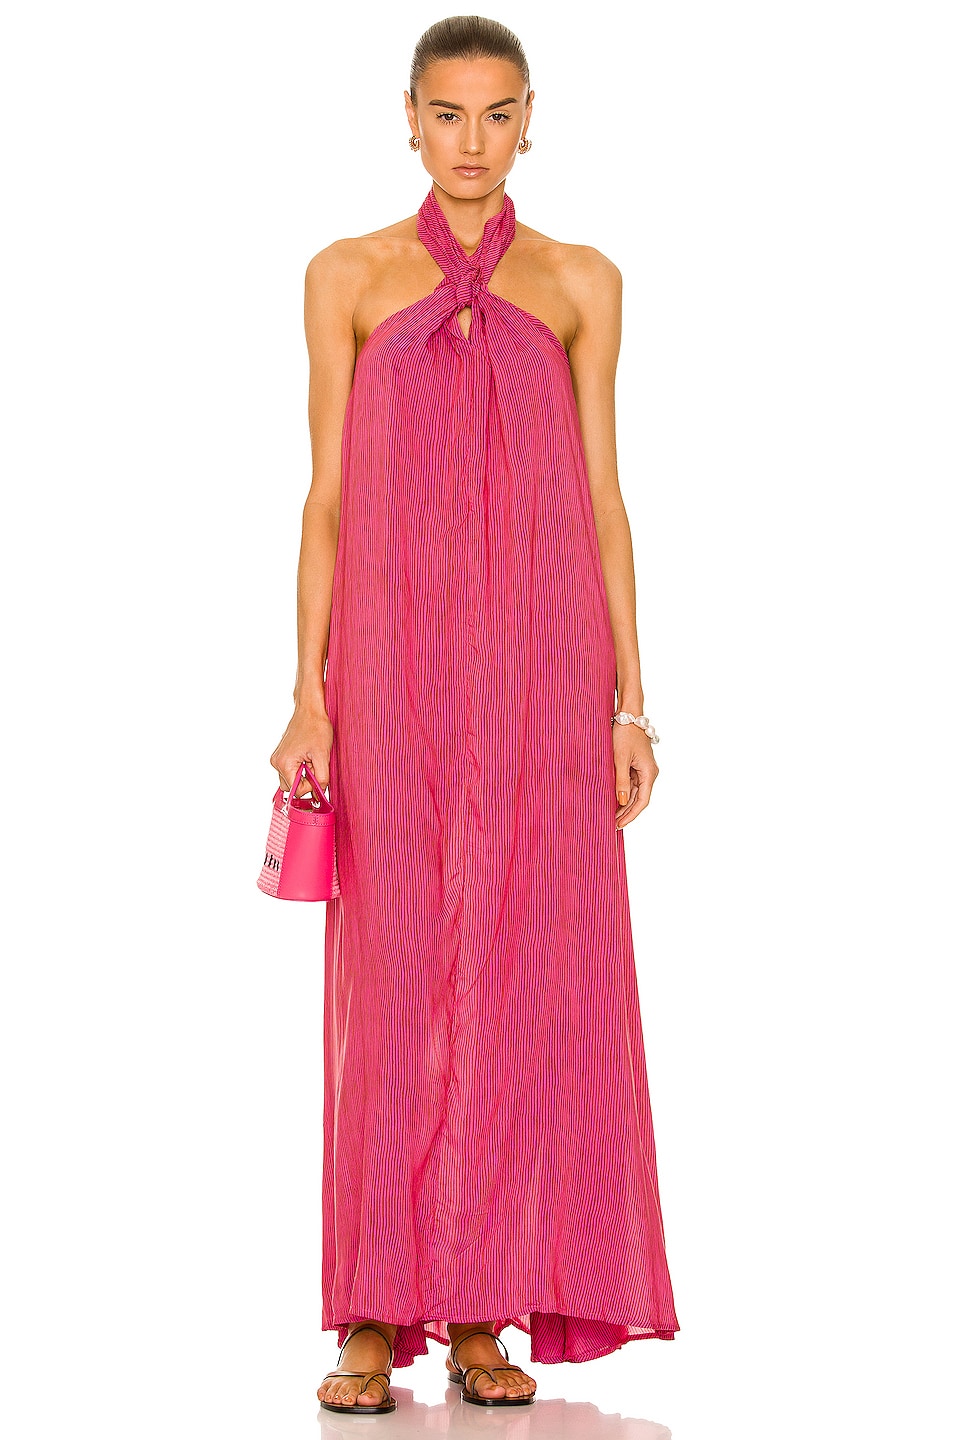 Image 1 of Natalie Martin Astrid Dress in Wobbly Stripe Puglia Pink